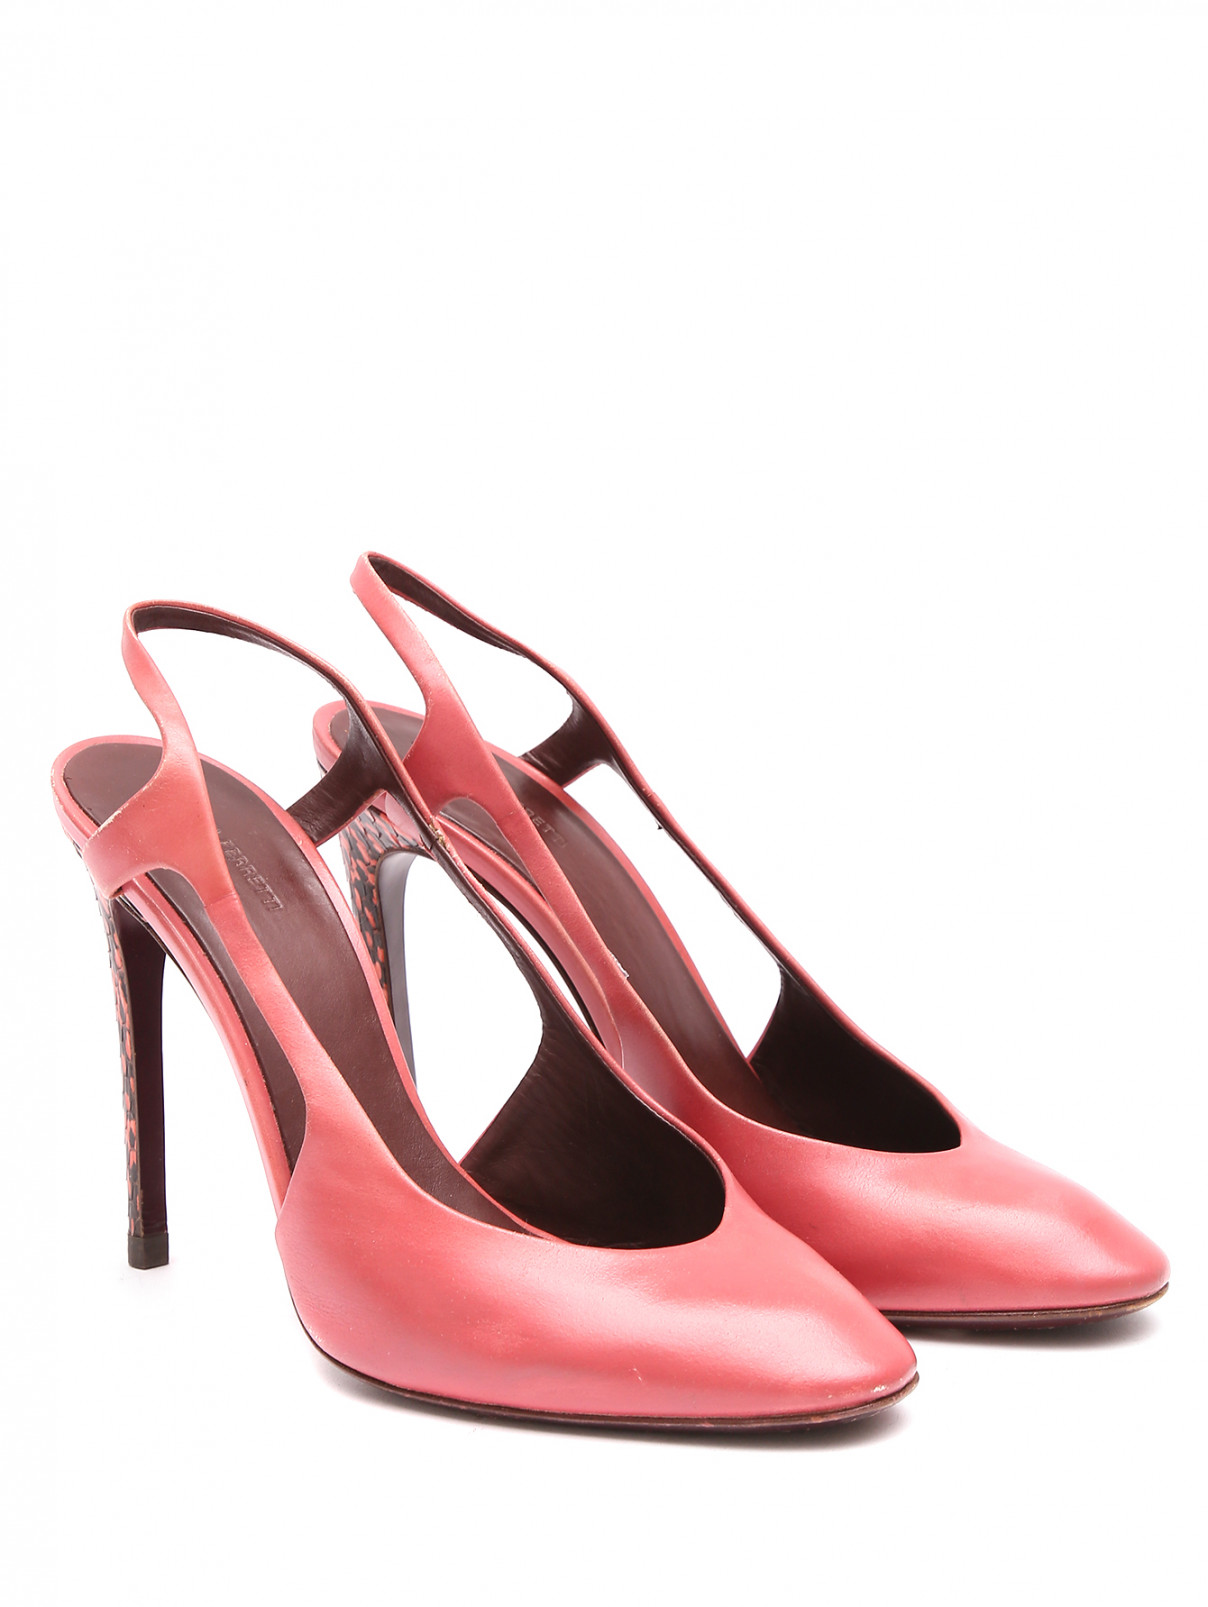 Туфли из кожи Alberta Ferretti  –  Общий вид  – Цвет:  Розовый